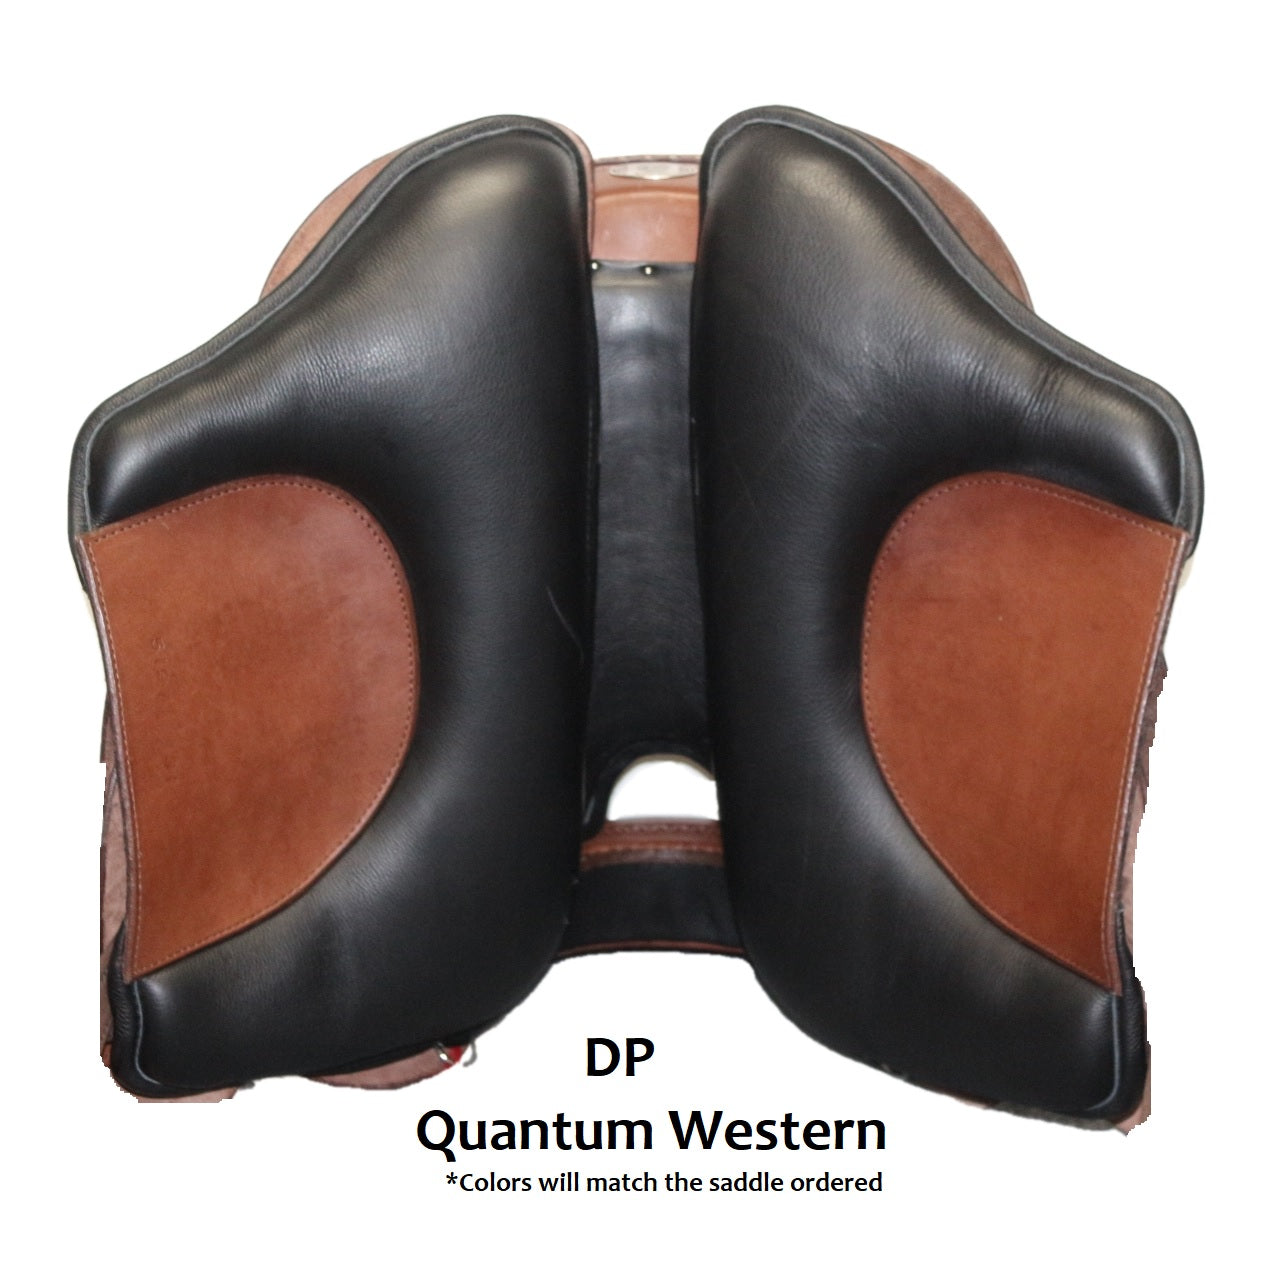 DP Saddlery Quantum Western 6900 S2